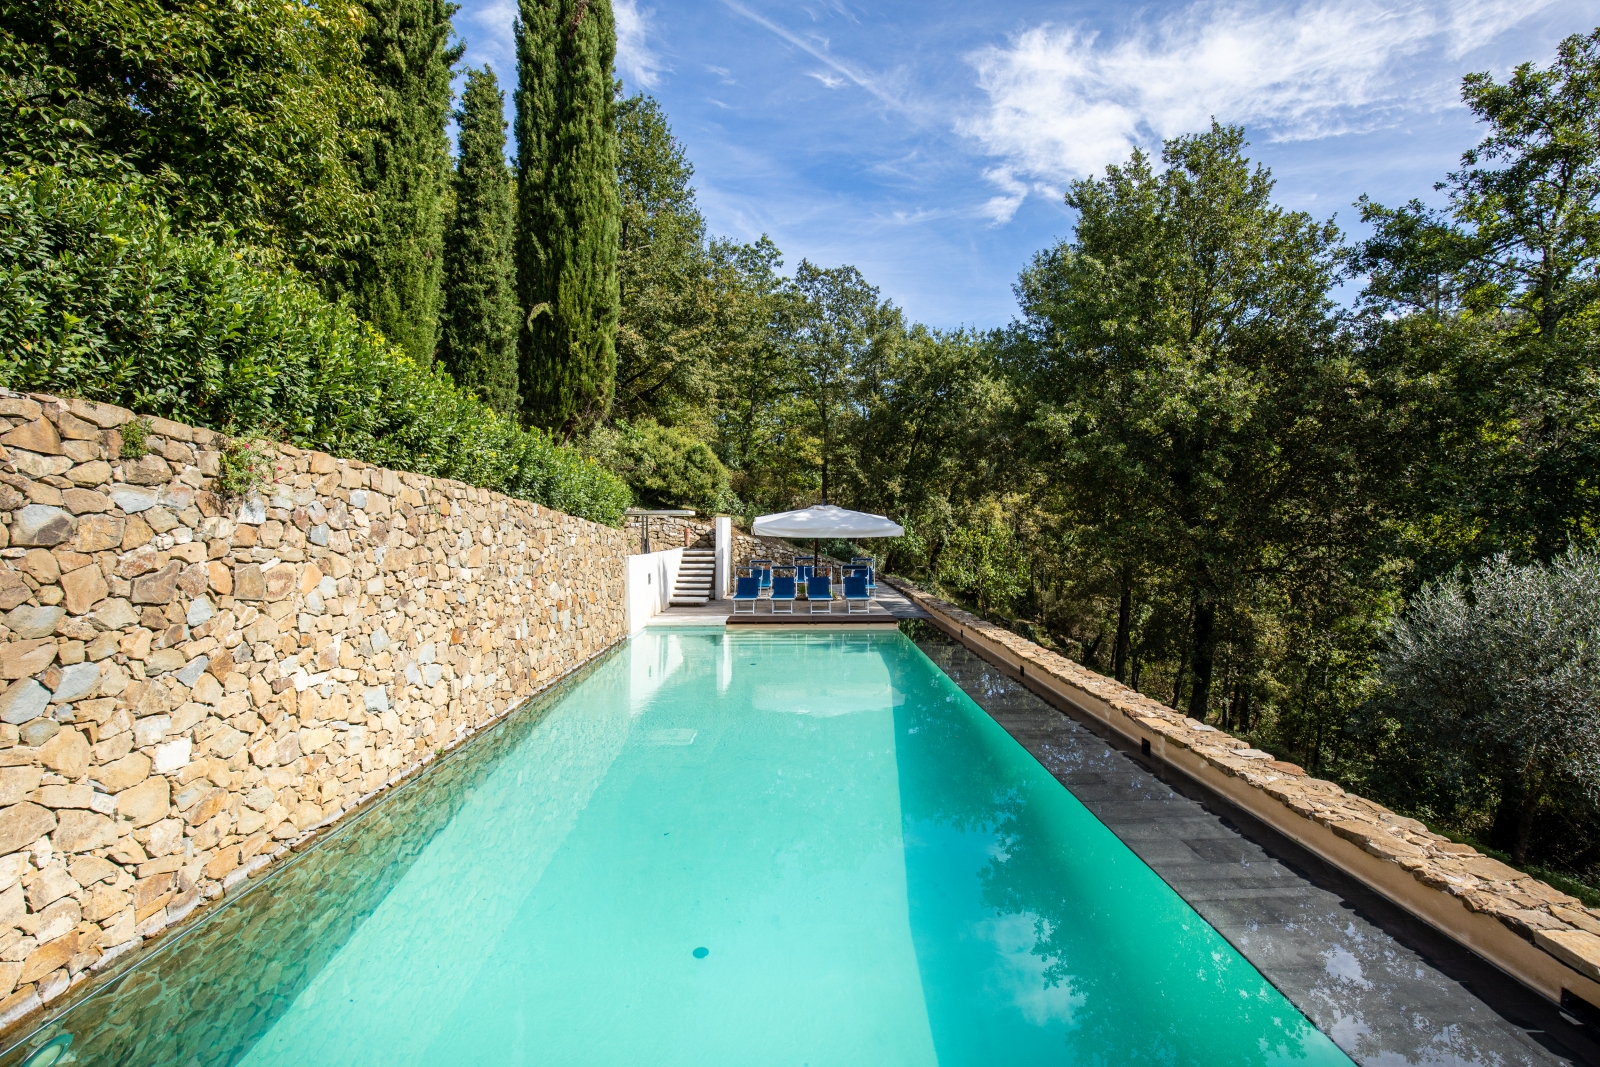 Pool with sun loungers, umbrella, stone wall and trees at Villa Baciata in Tuscany, Italy